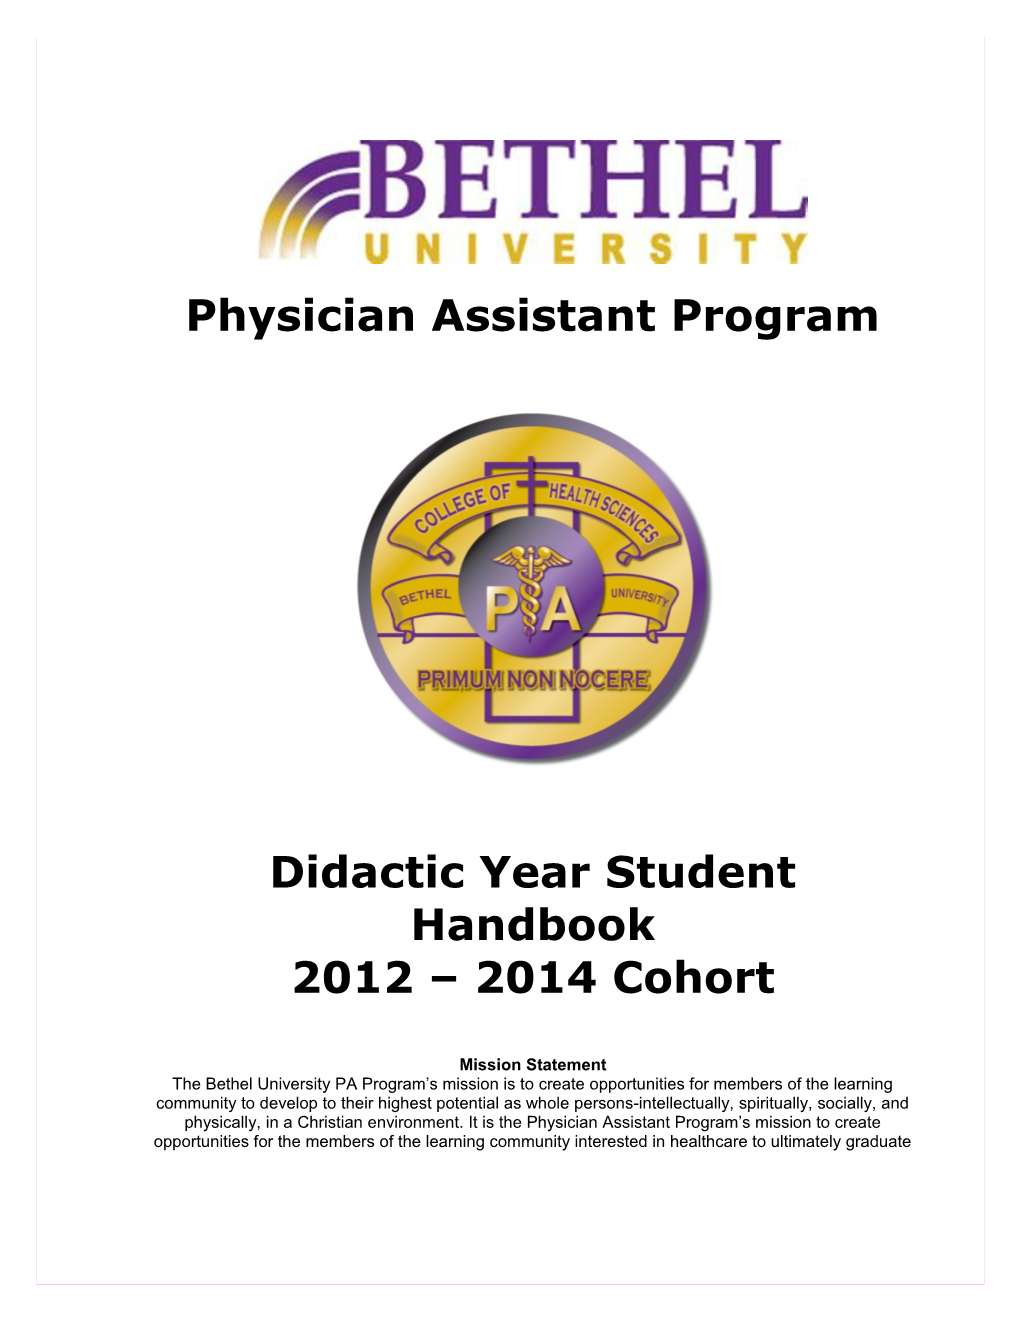 Didactic Year Student Handbook